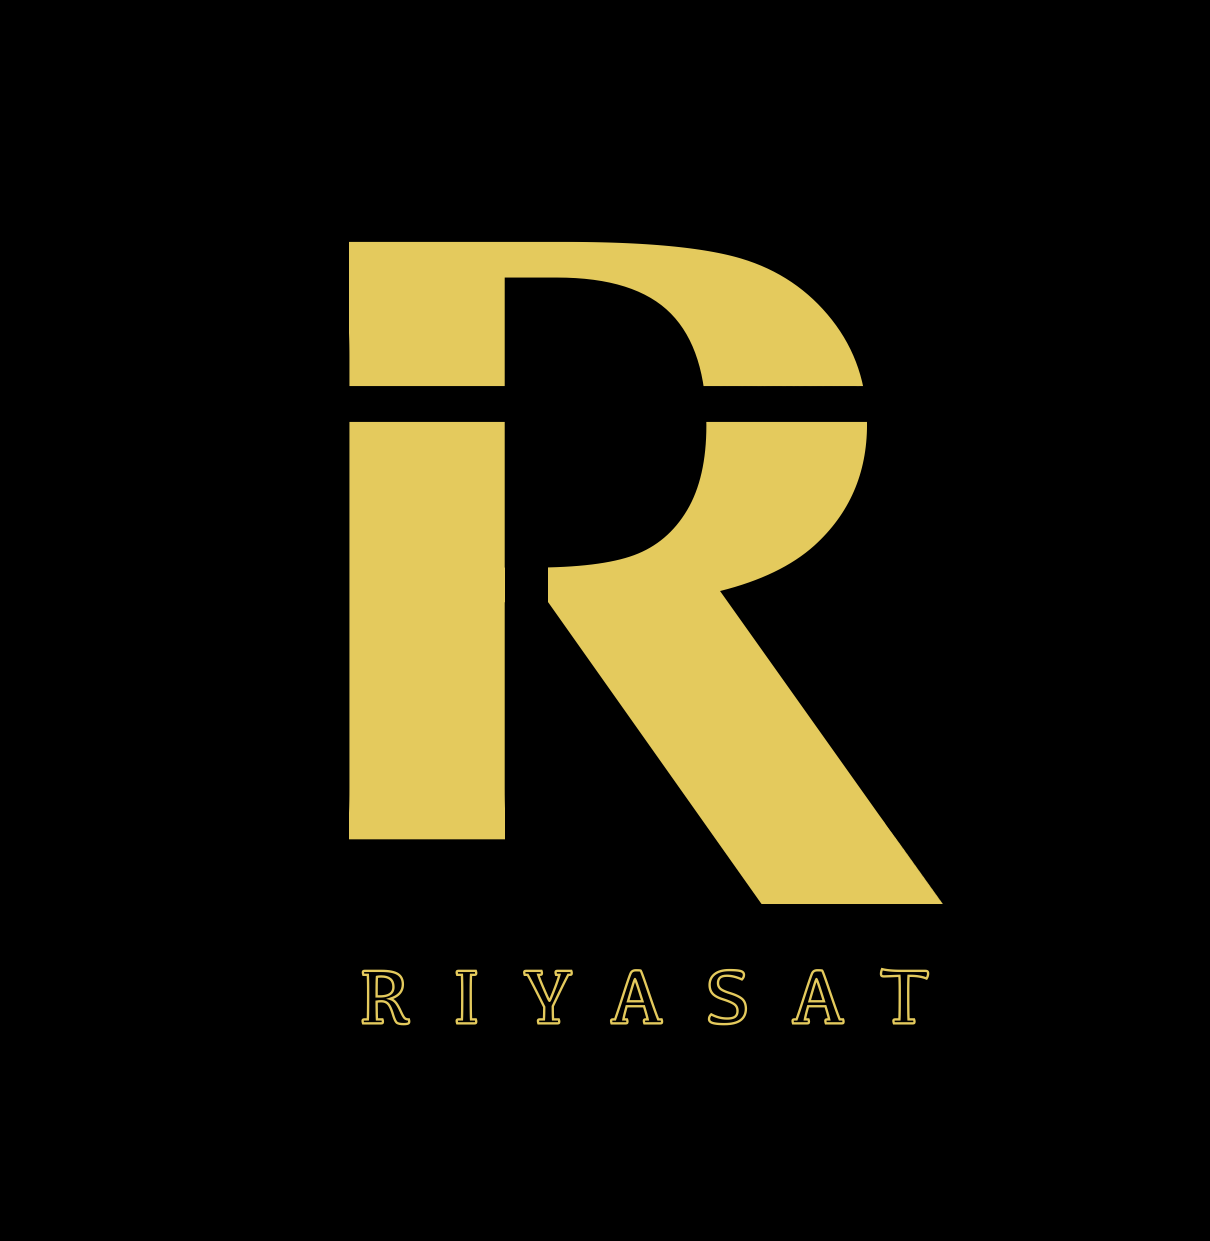 Riyasat